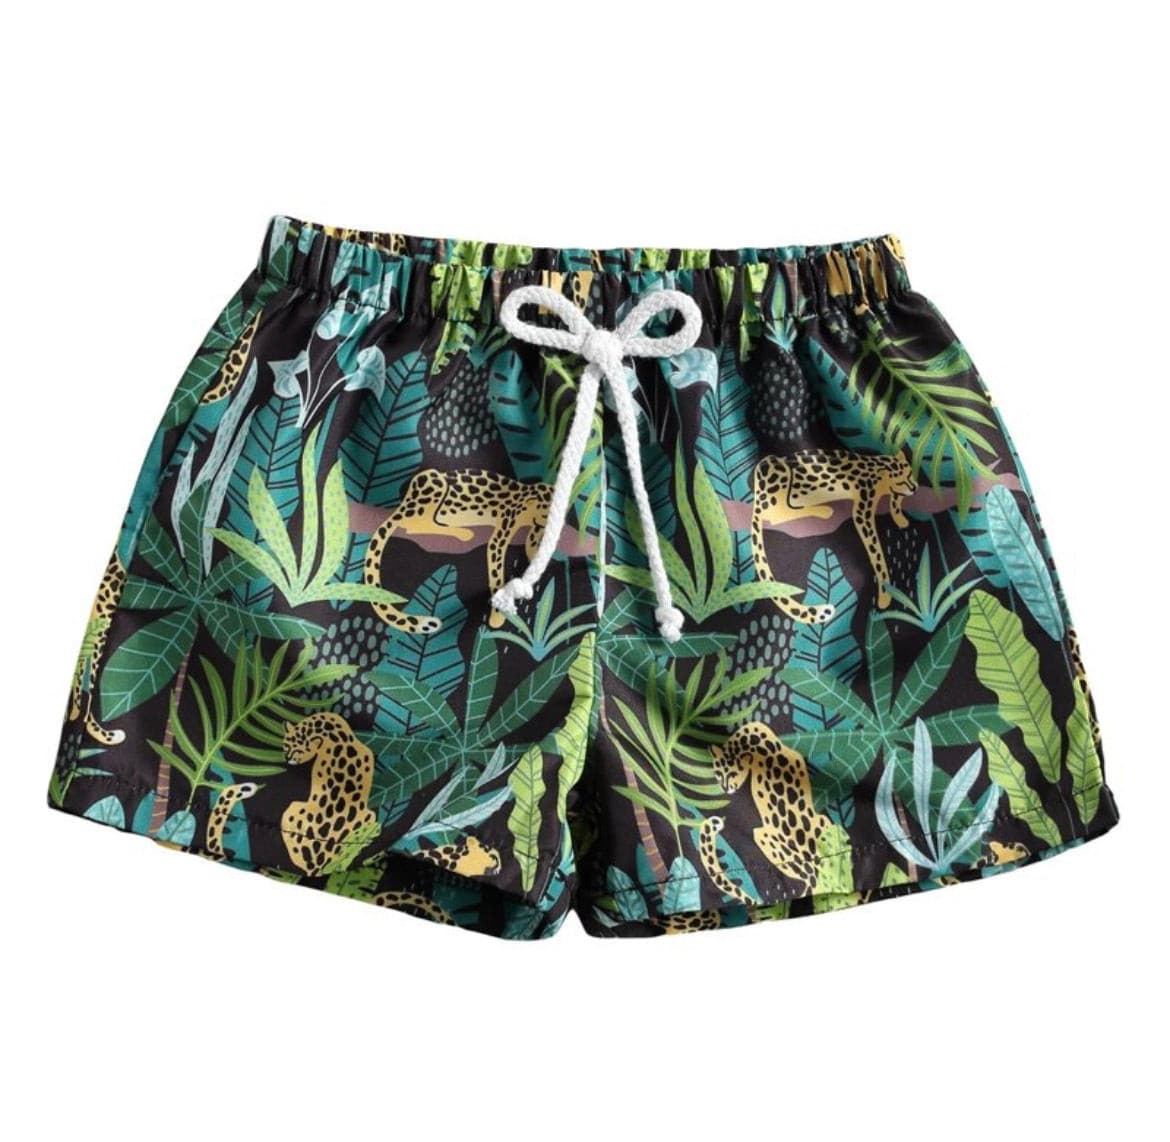 Jungle Beach Shorts / Boardies.